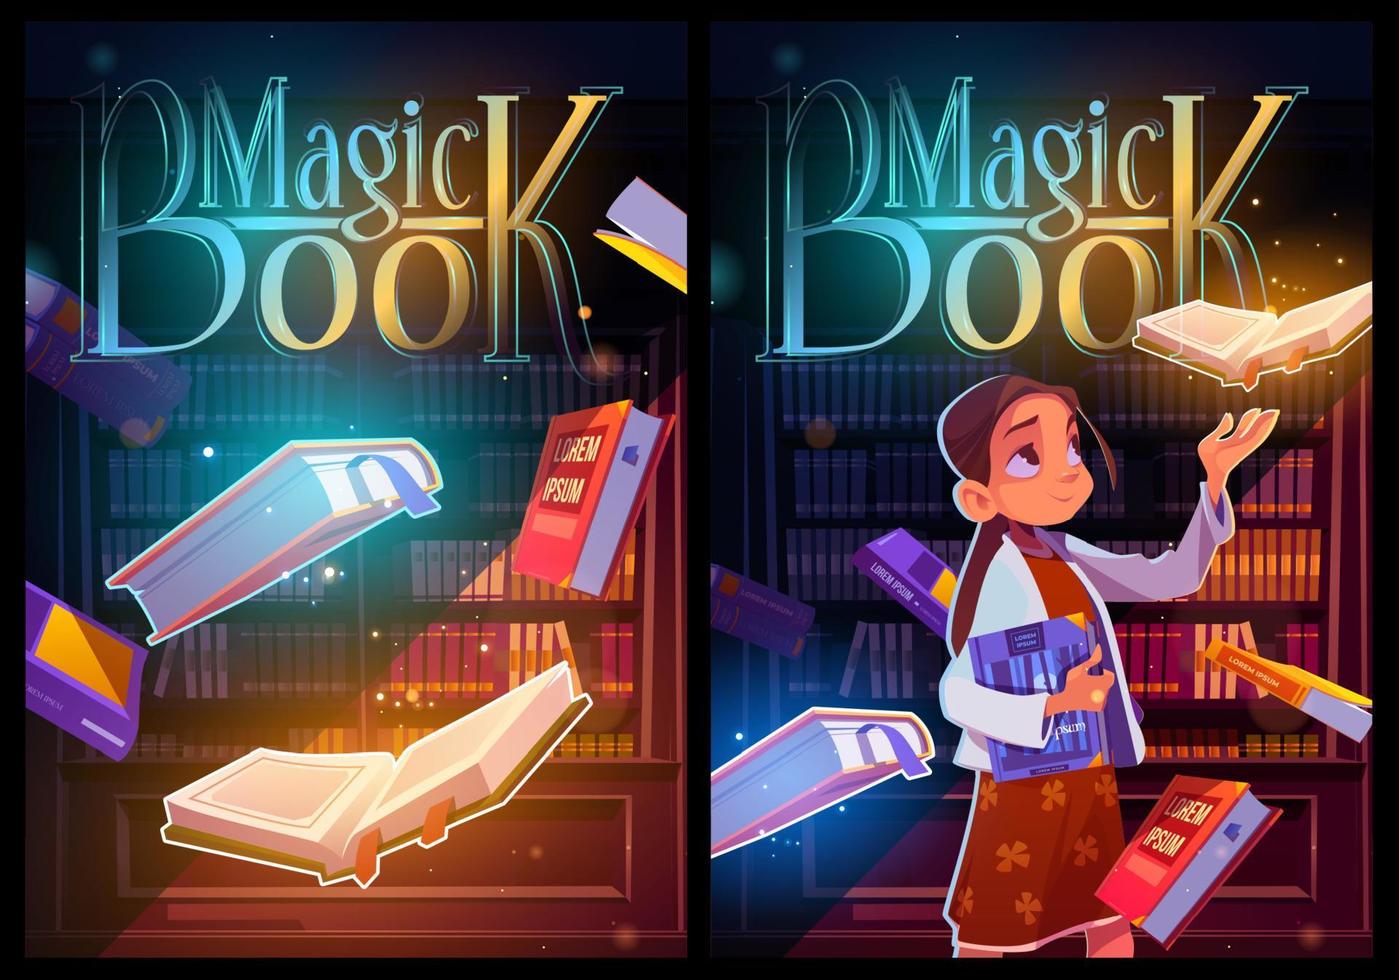 magie boek tekenfilm affiches, jong meisje in bibliotheek vector